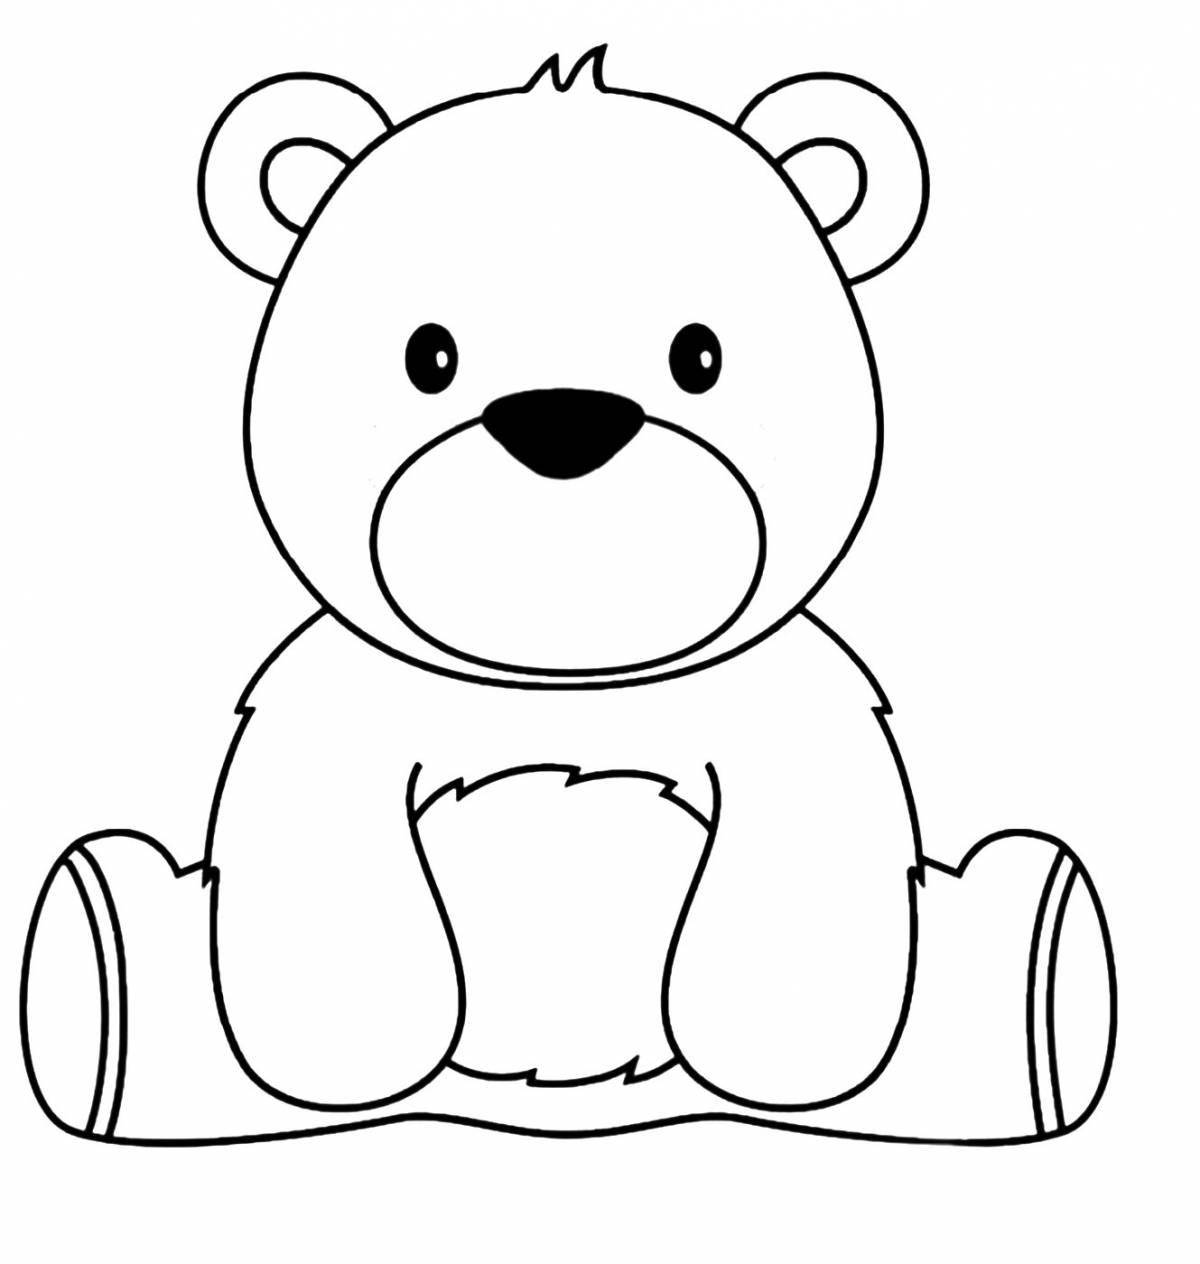 Drawing of a cheerful teddy bear